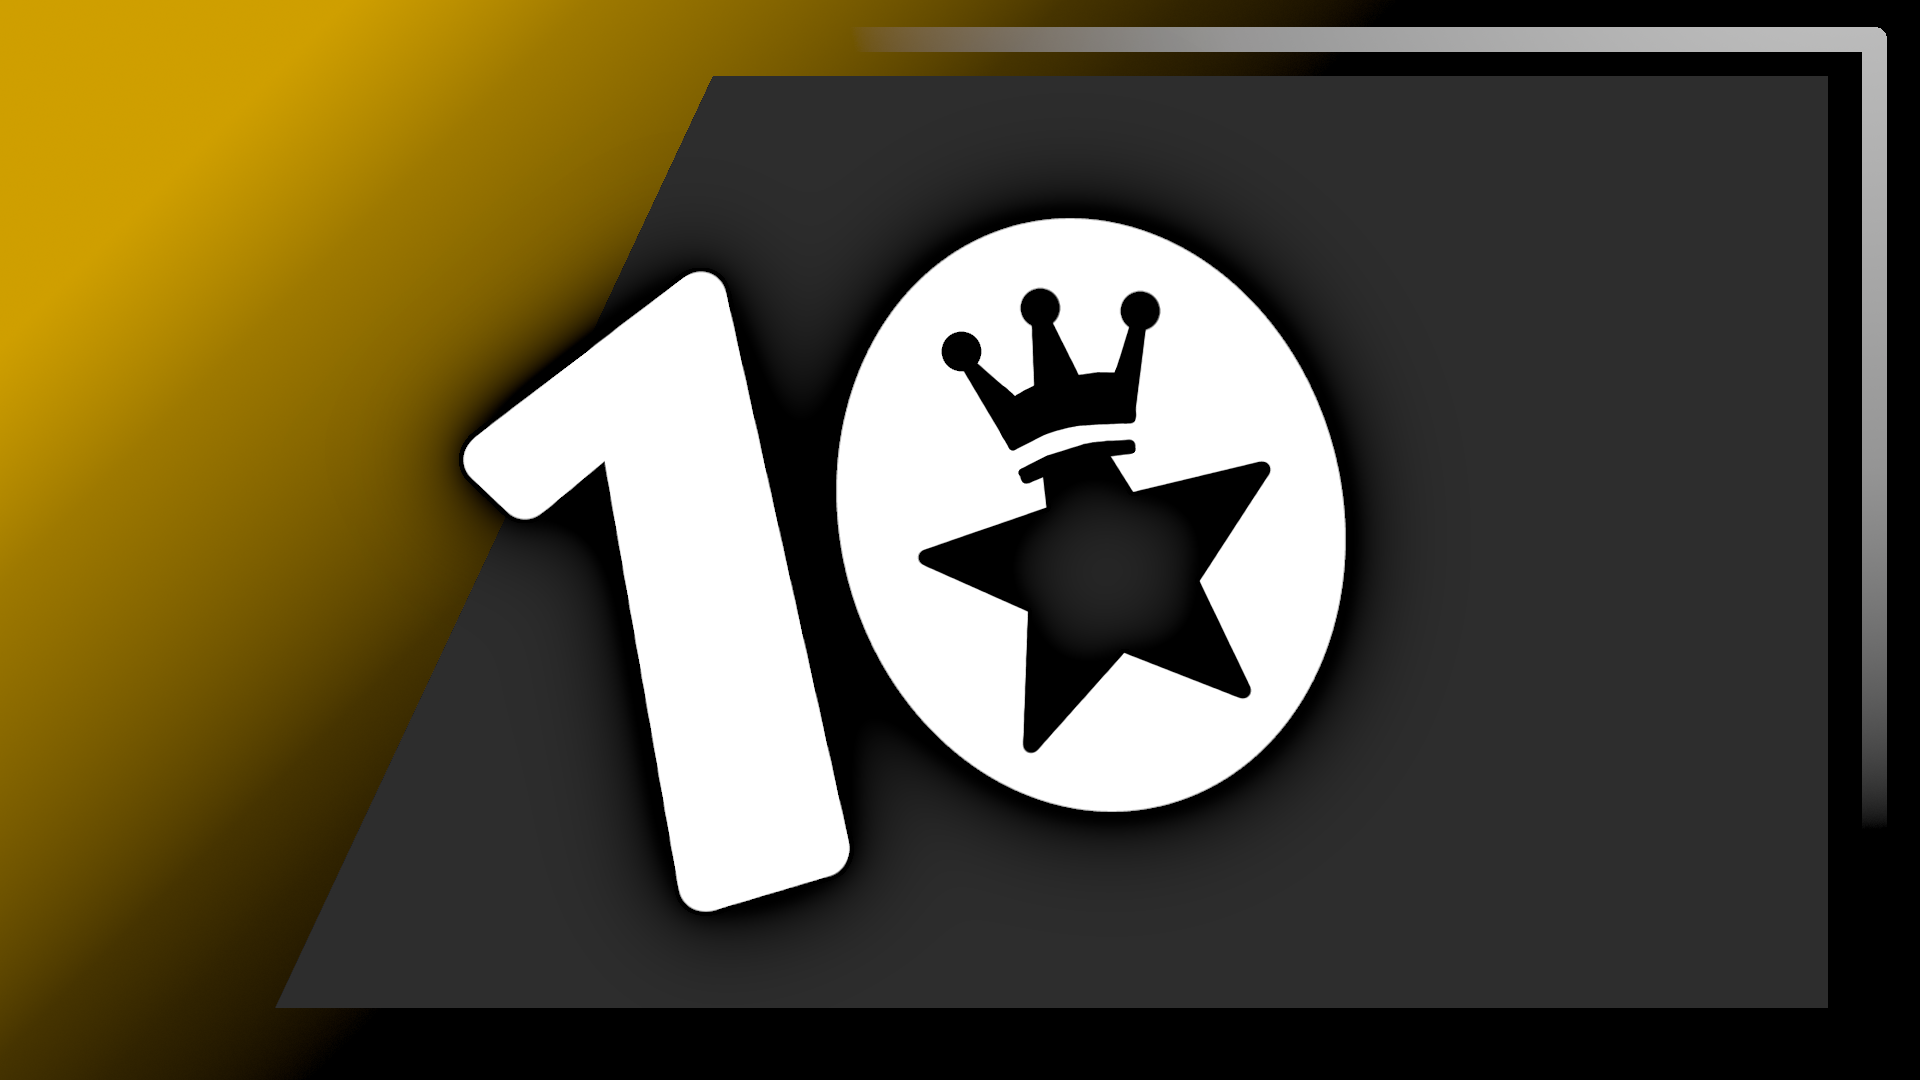 Icon for 10 stars award